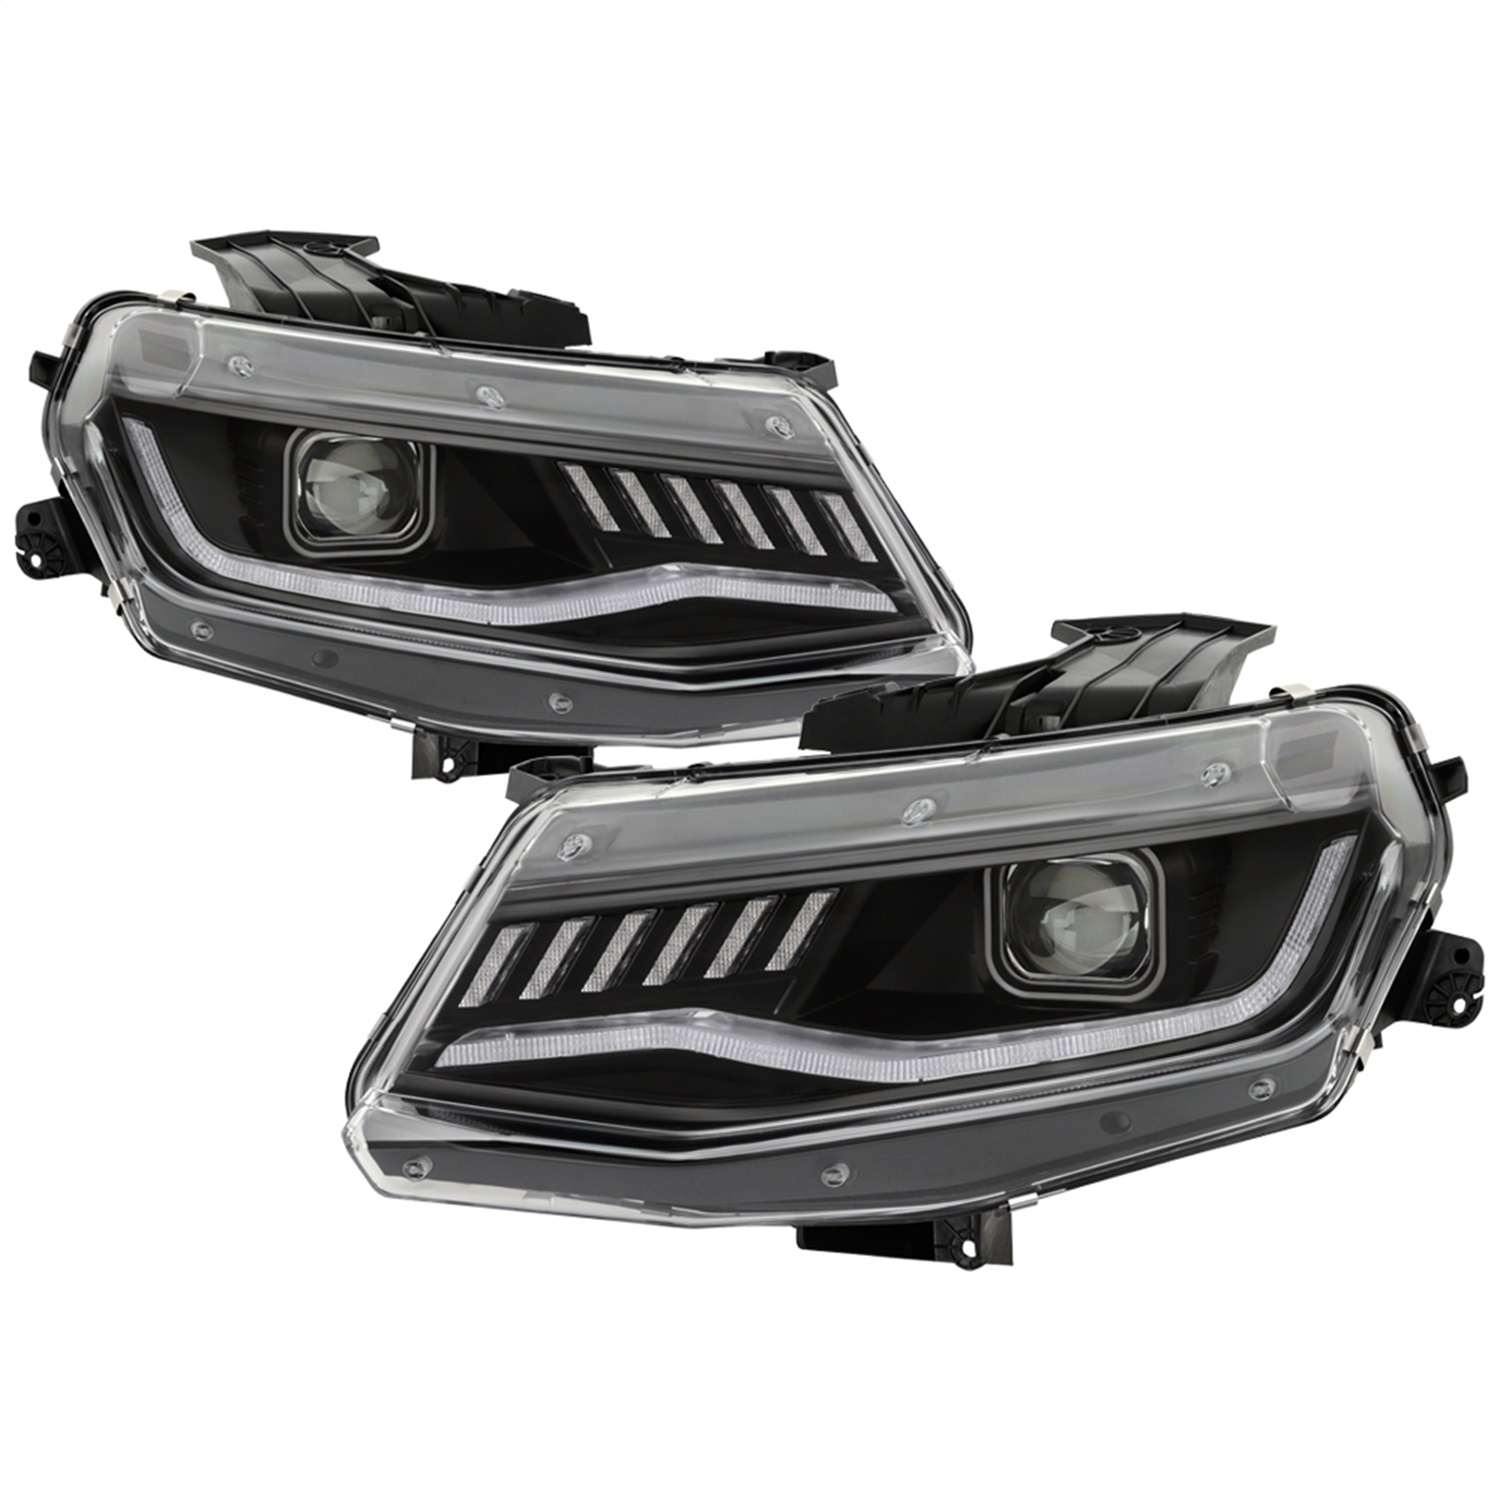 Spyder Auto 5087331 Projector Headlights Fits 16-18 Camaro